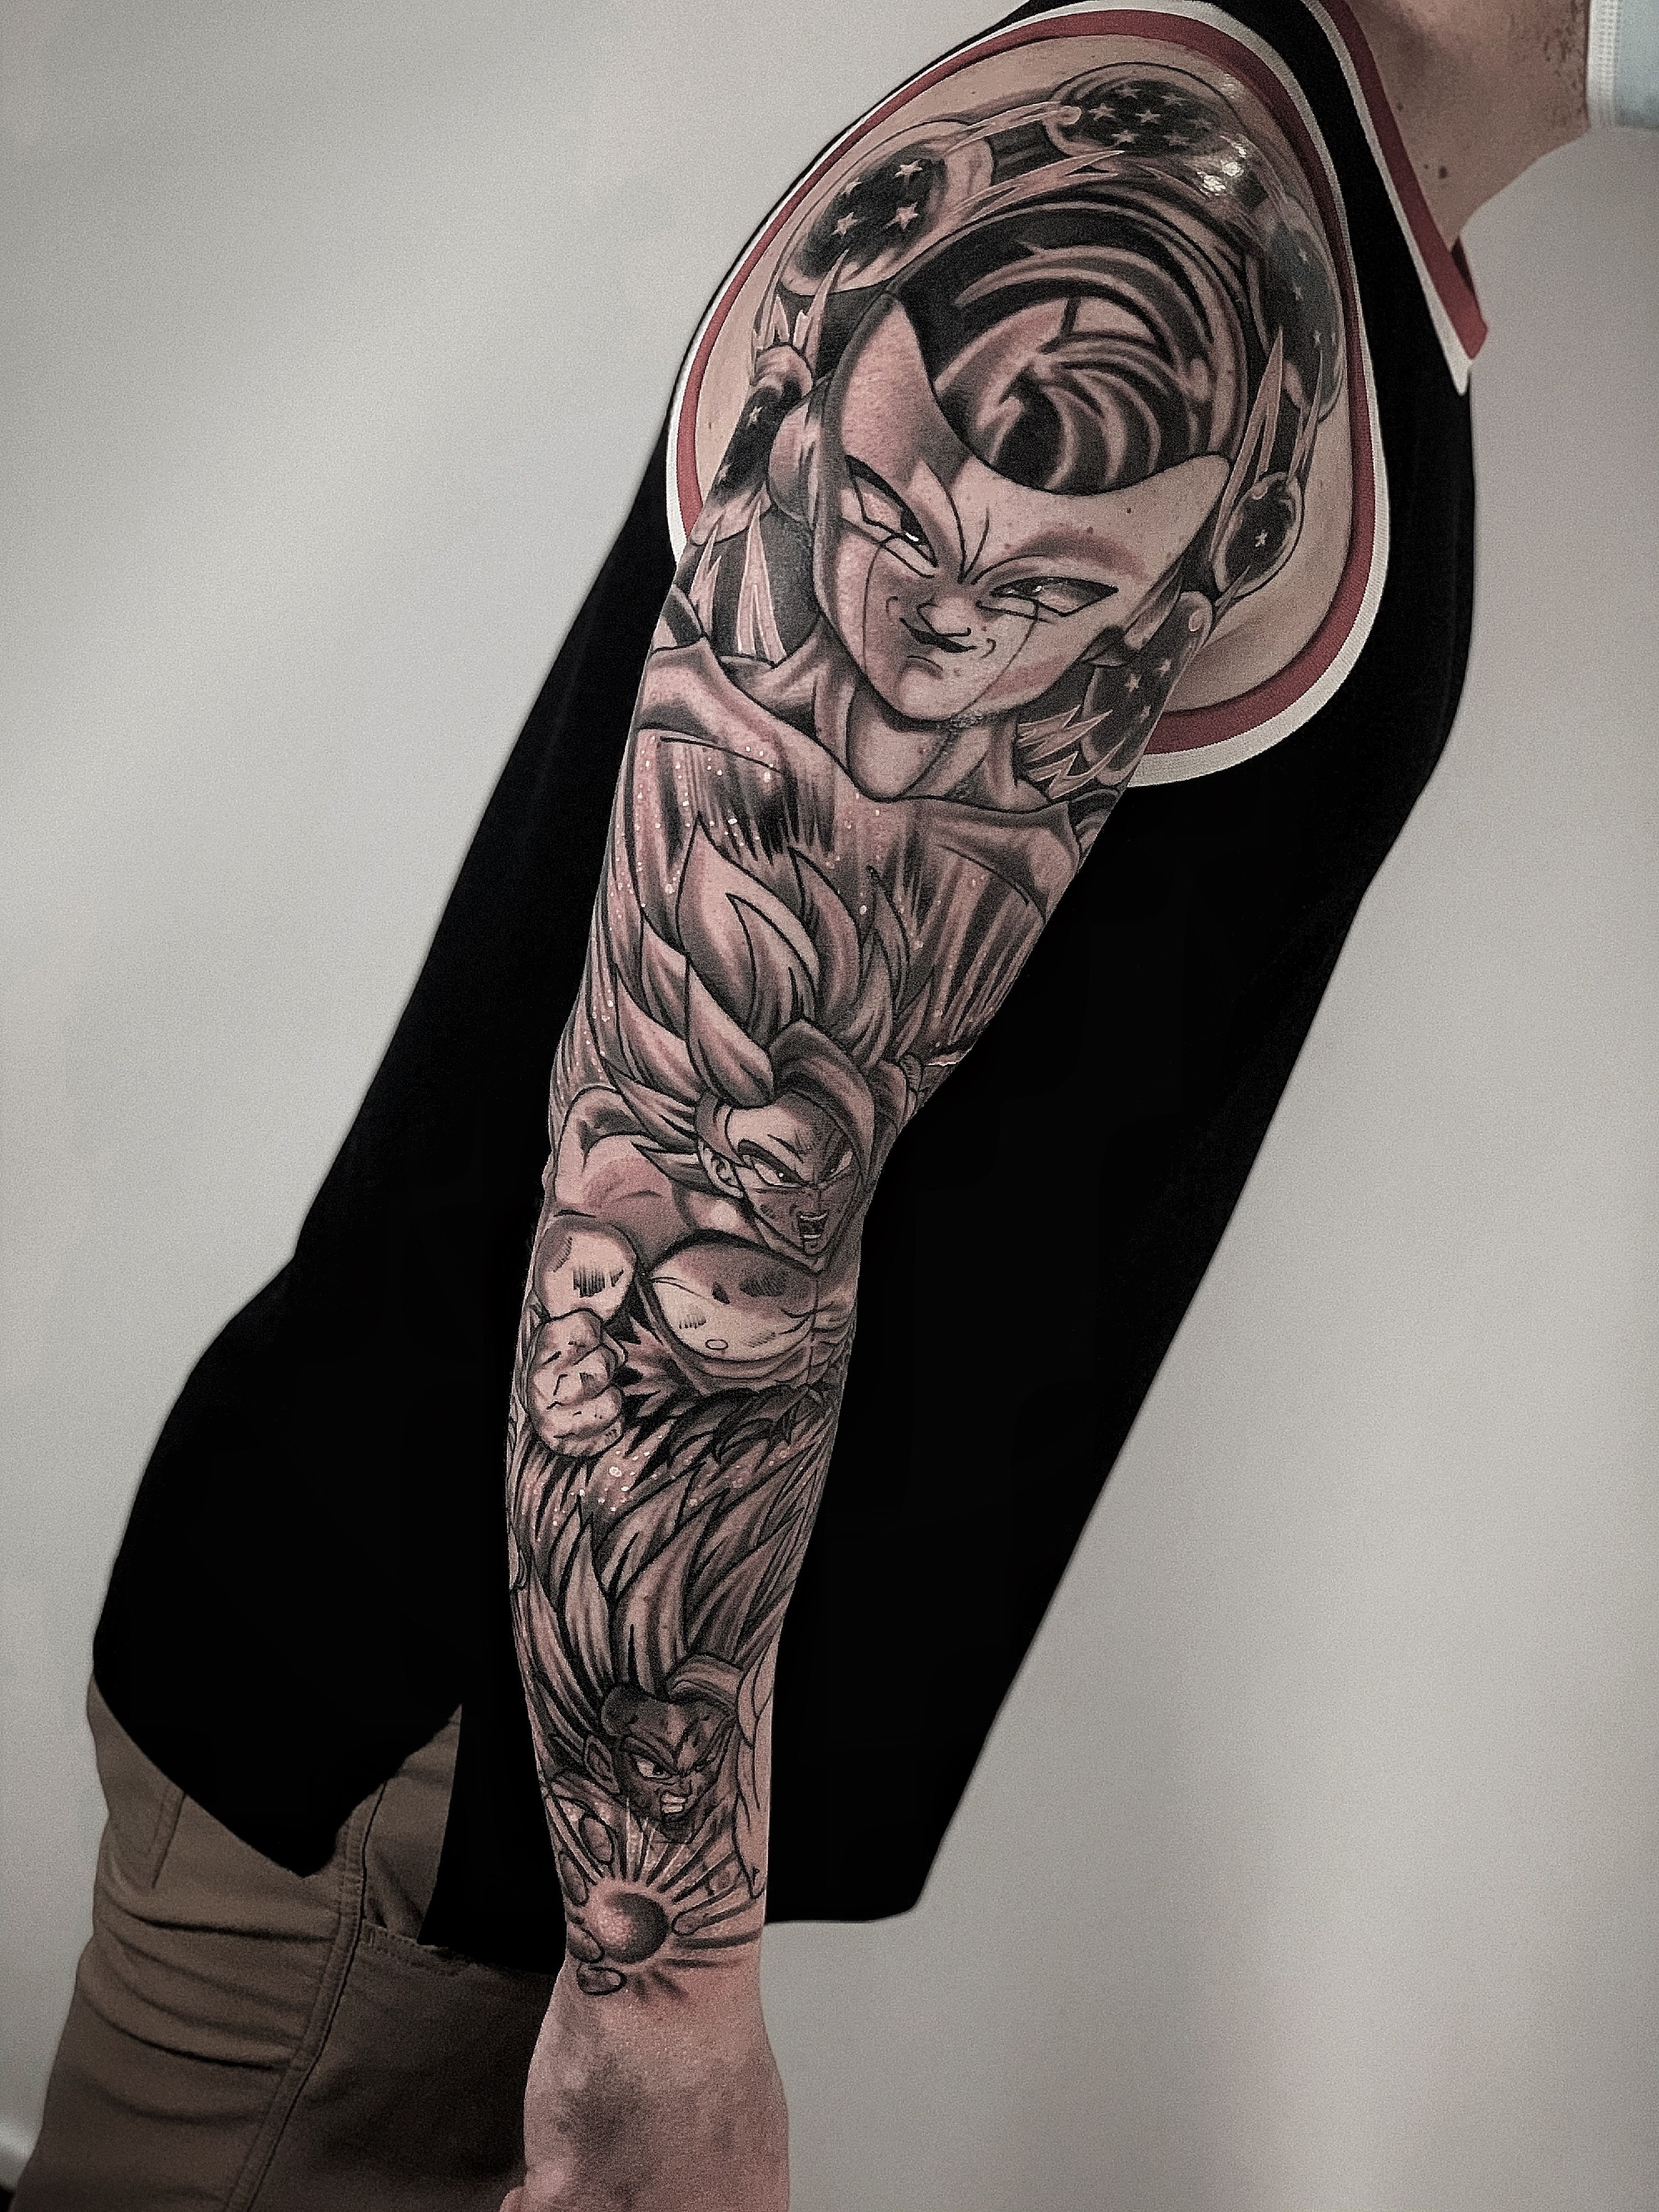 Marvel Guys Shaded Black And Grey Superhero Themed Full Arm Sleeve Tattoos  | Marvel tattoos, Full sleeve tattoos, Tattoo sleeve designs